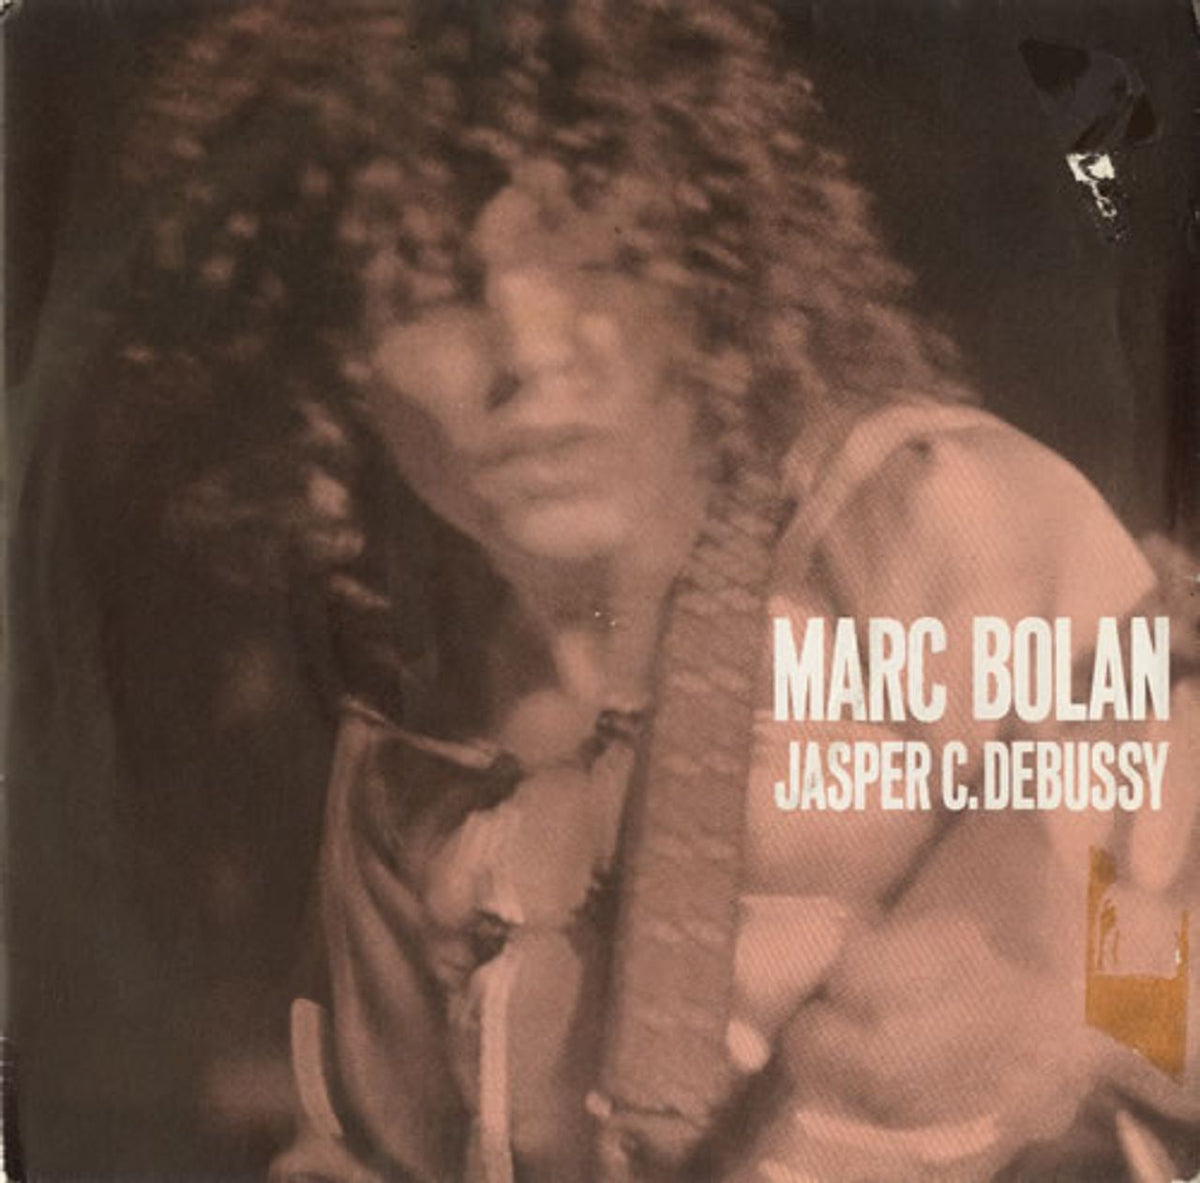 Marc Bolan Jasper C. Debussy - 4 prong UK 7